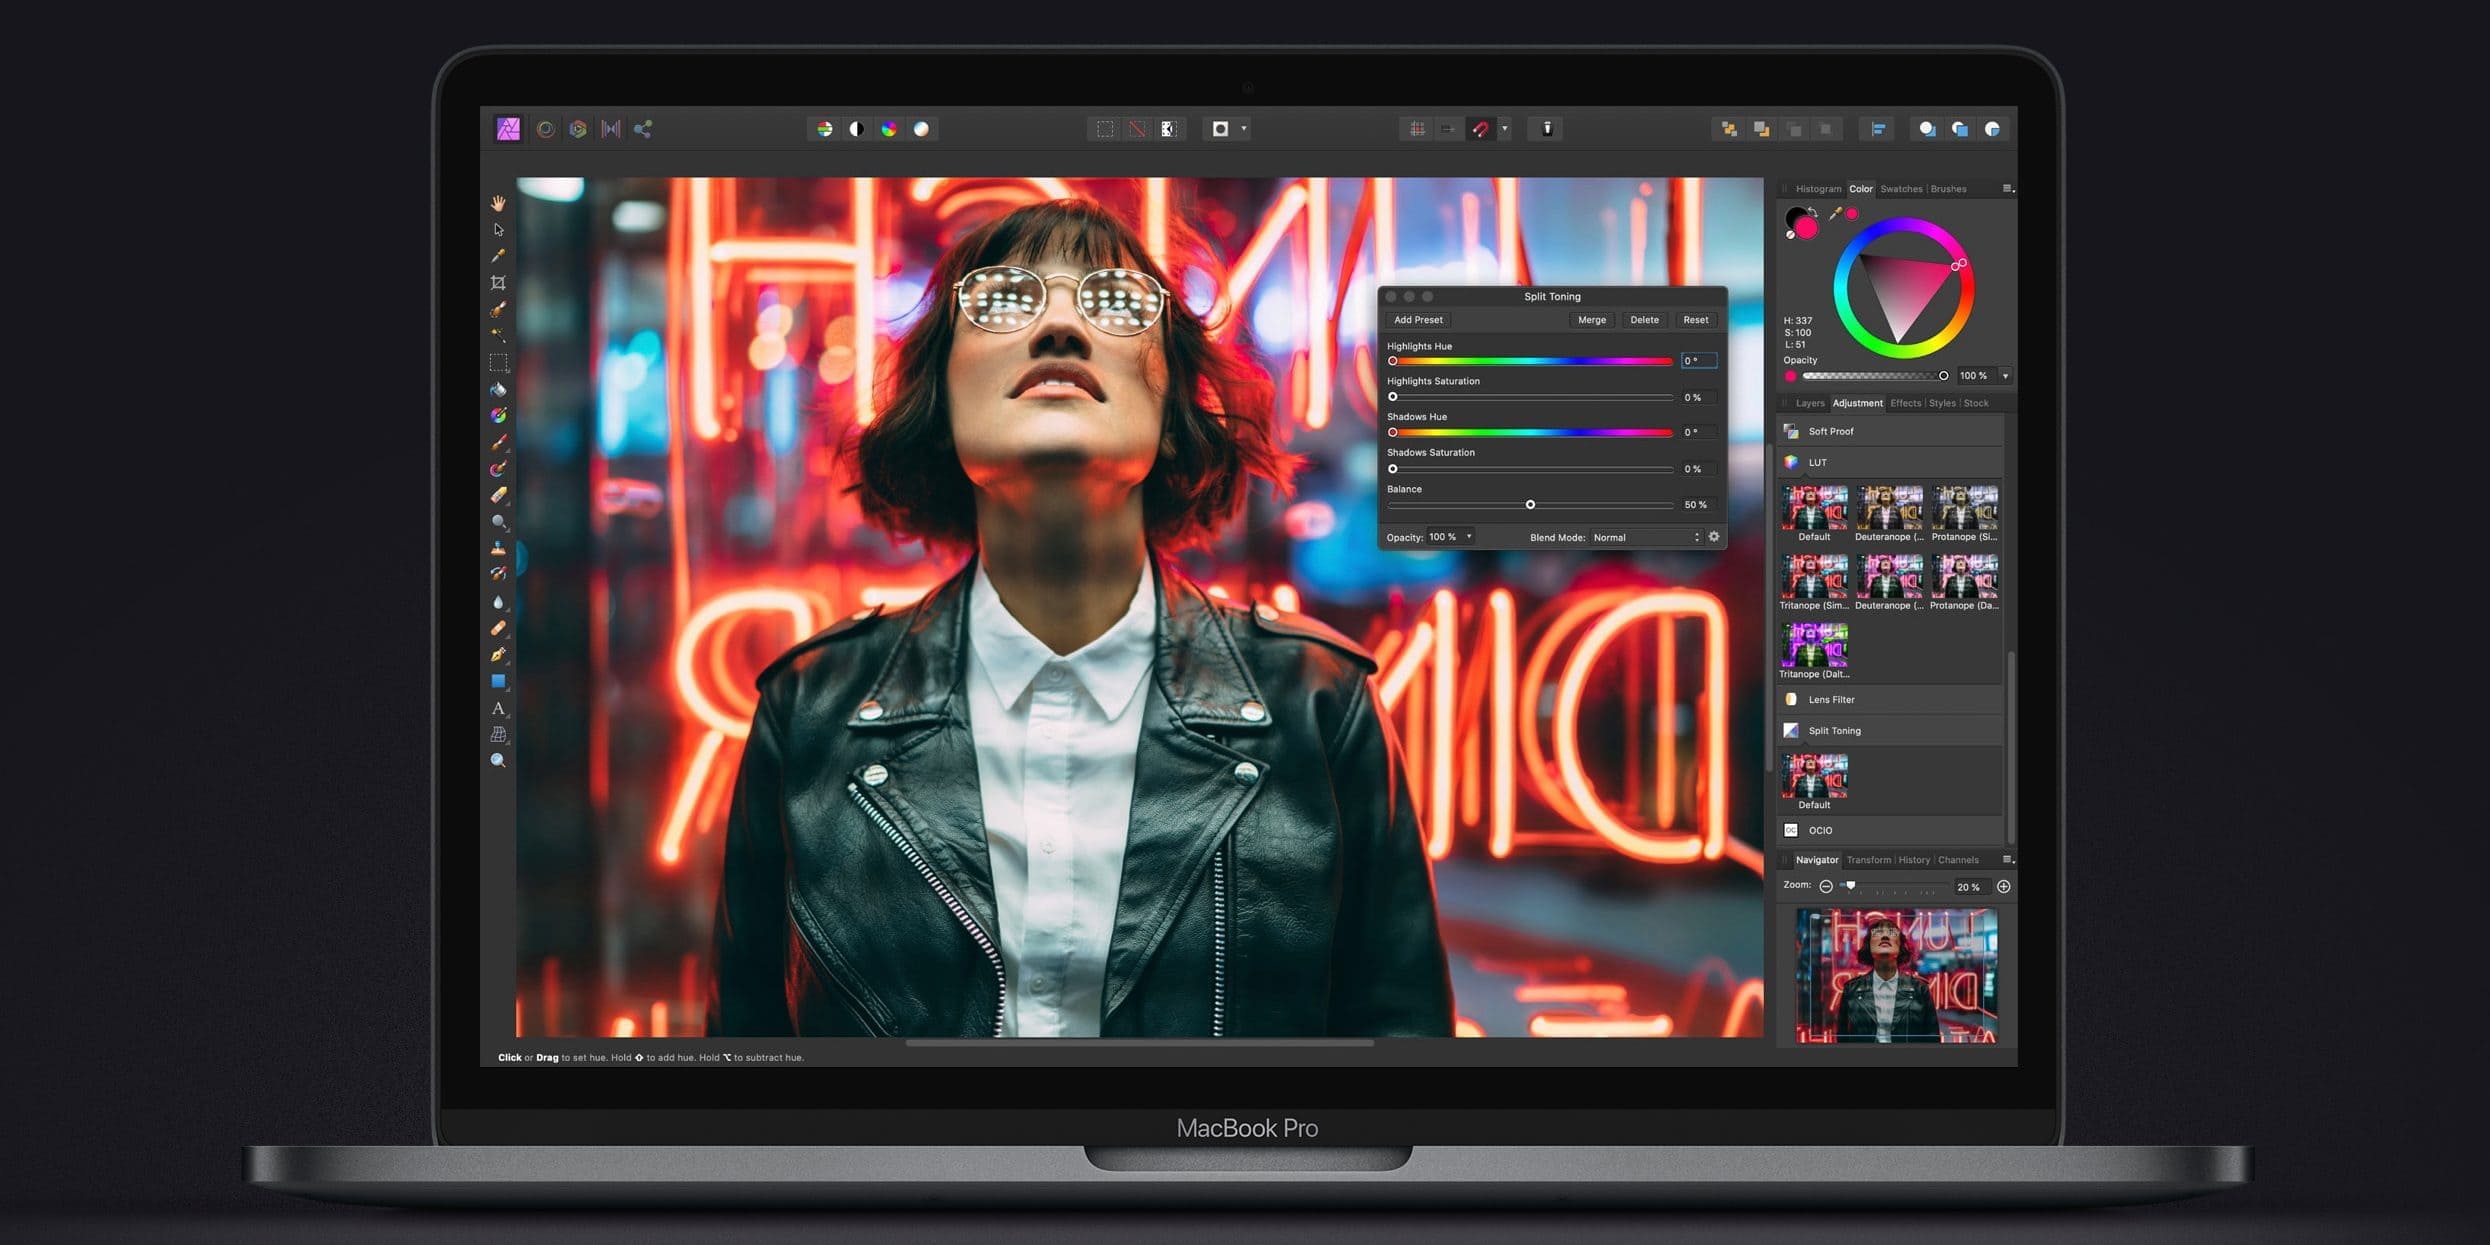 Laptop Apple Macbook Pro MXK32 256Gb (2020) (Space Gray)- Touch Bar